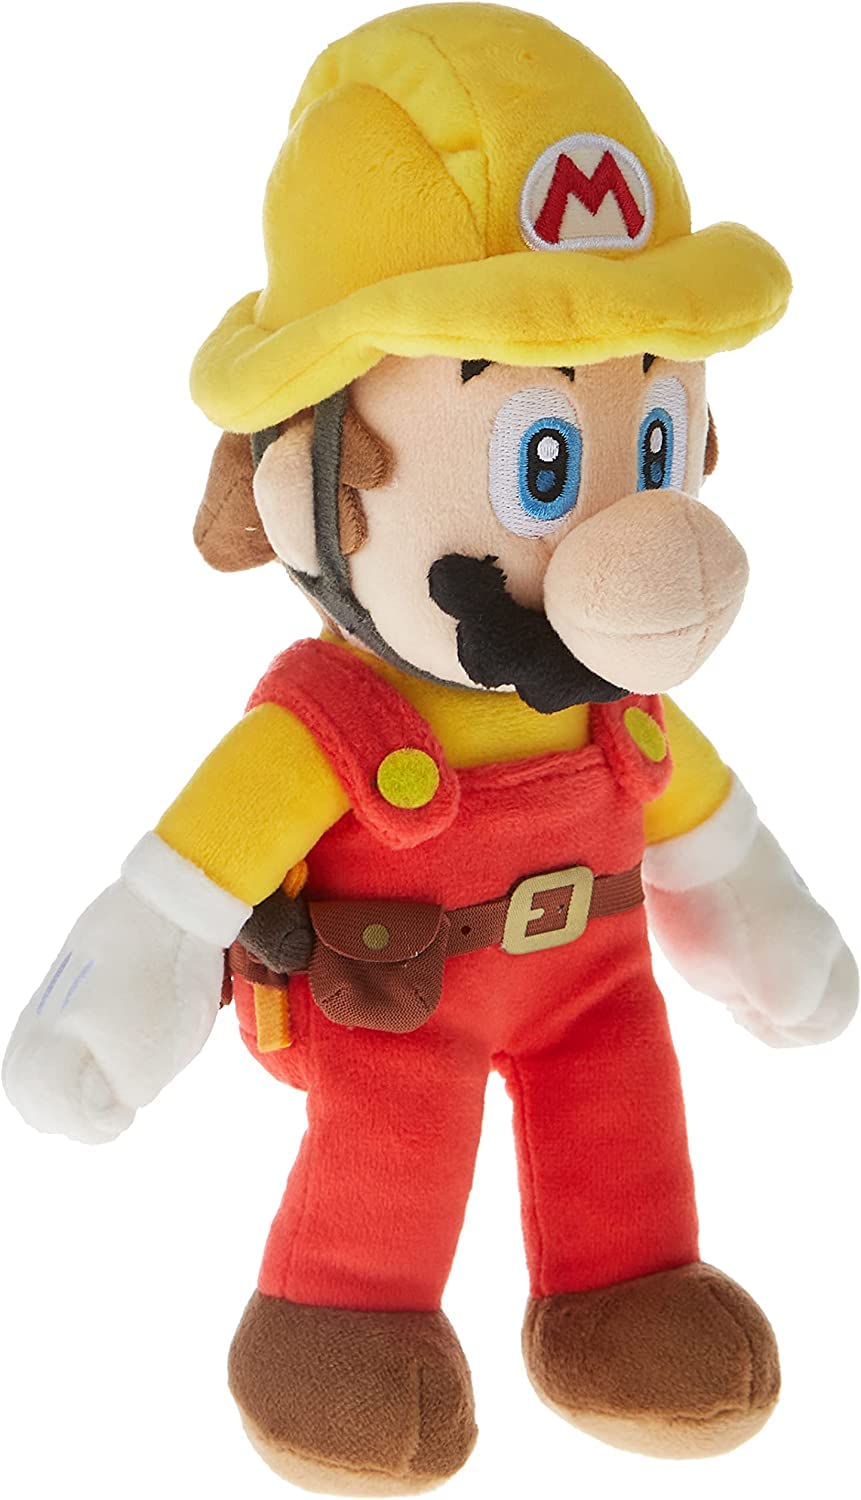 Little Buddy - 8" Builder Mario Plush (A01)